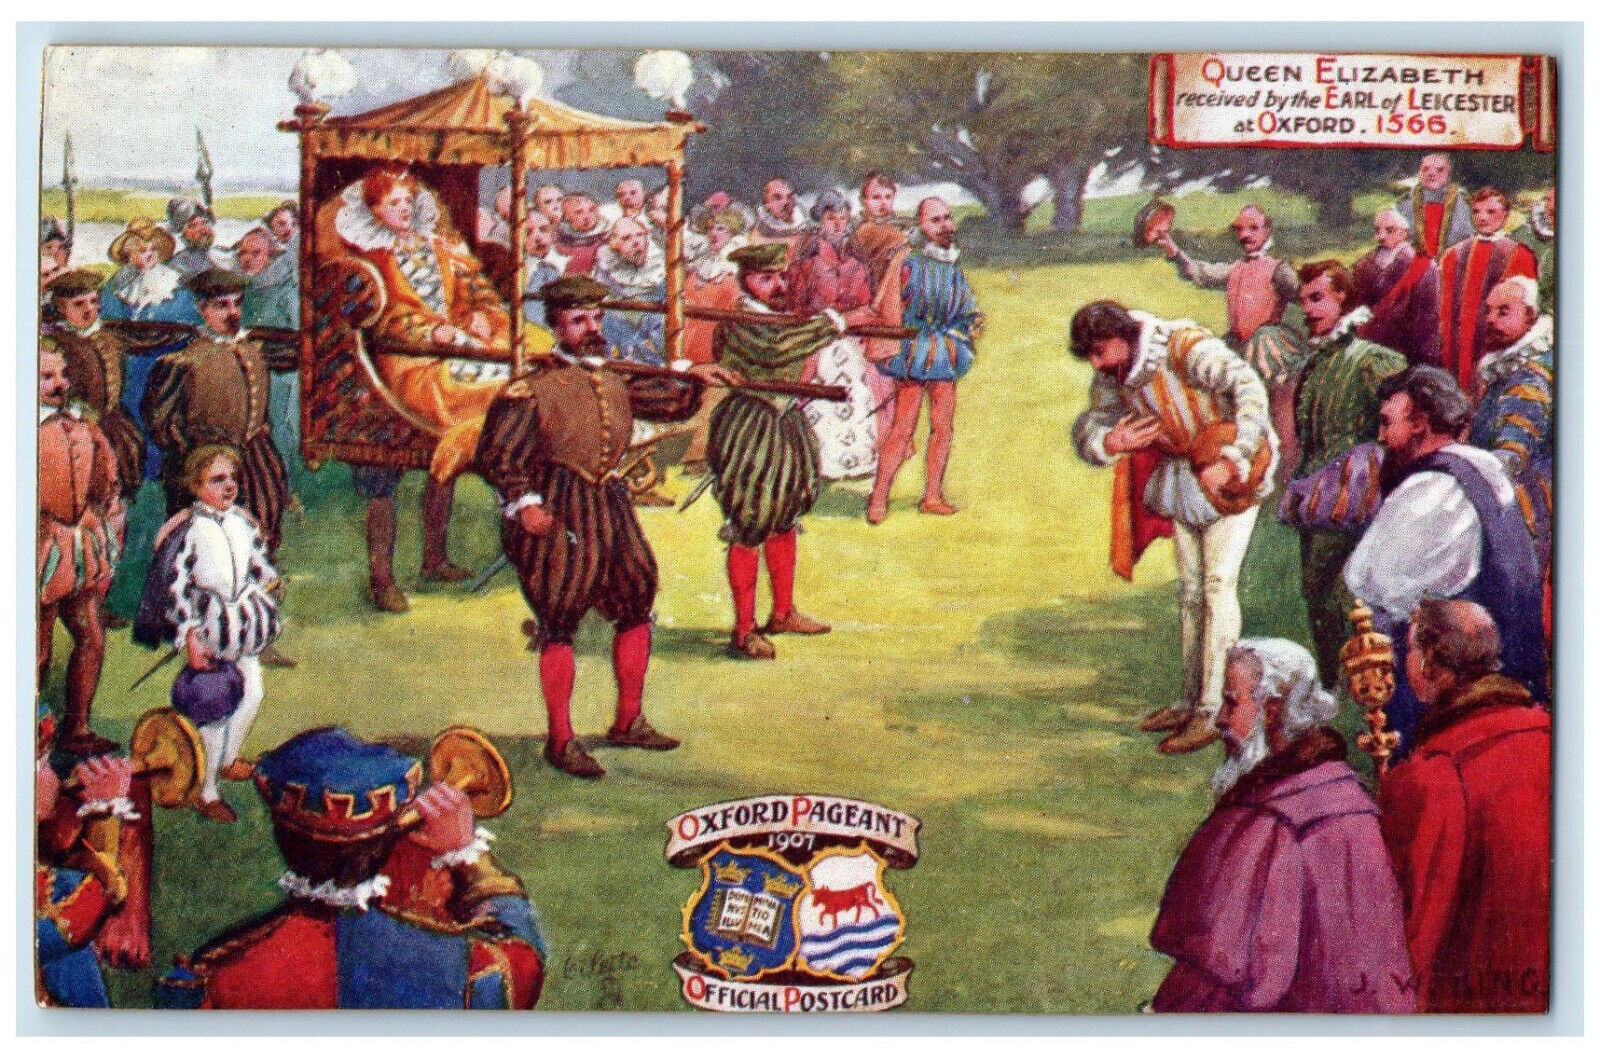 c1910 Queen Elizabeth Recieved By Ear of Leicester Oilette Tuck Art Postcard